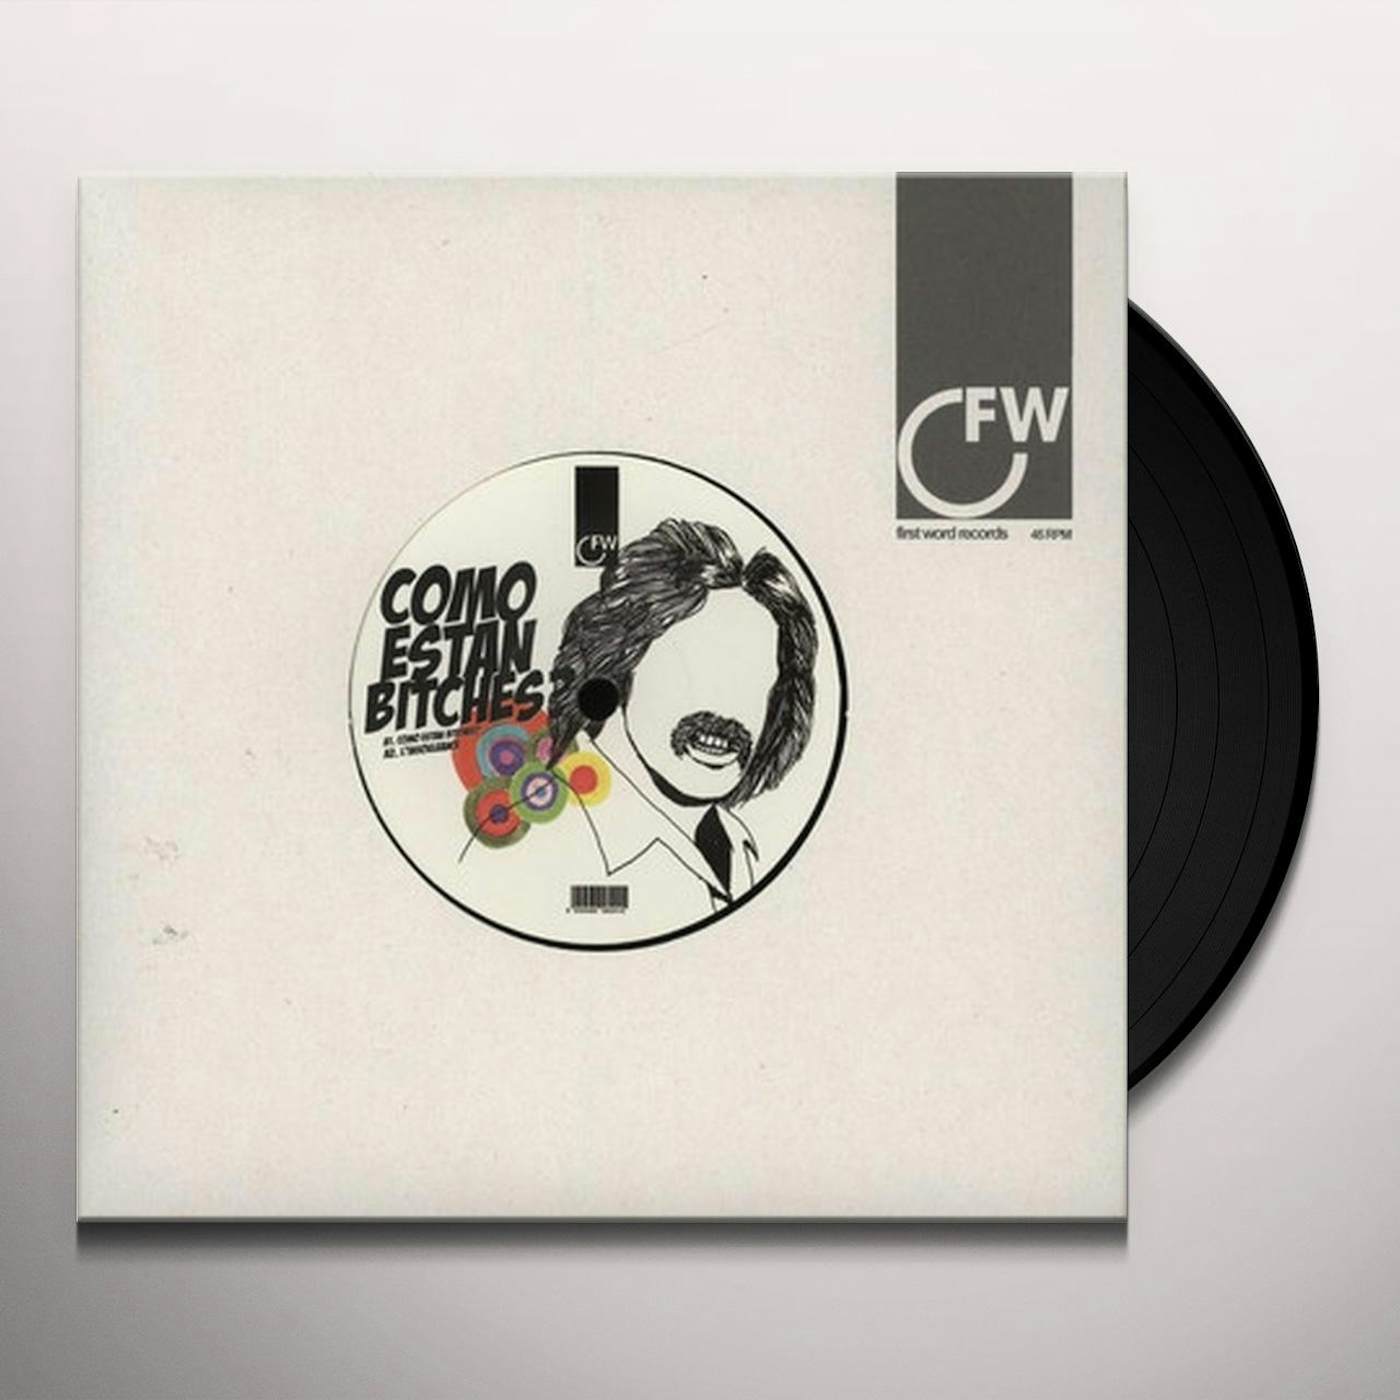 Souleance COMO ESTAN BITCHES? Vinyl Record - UK Release